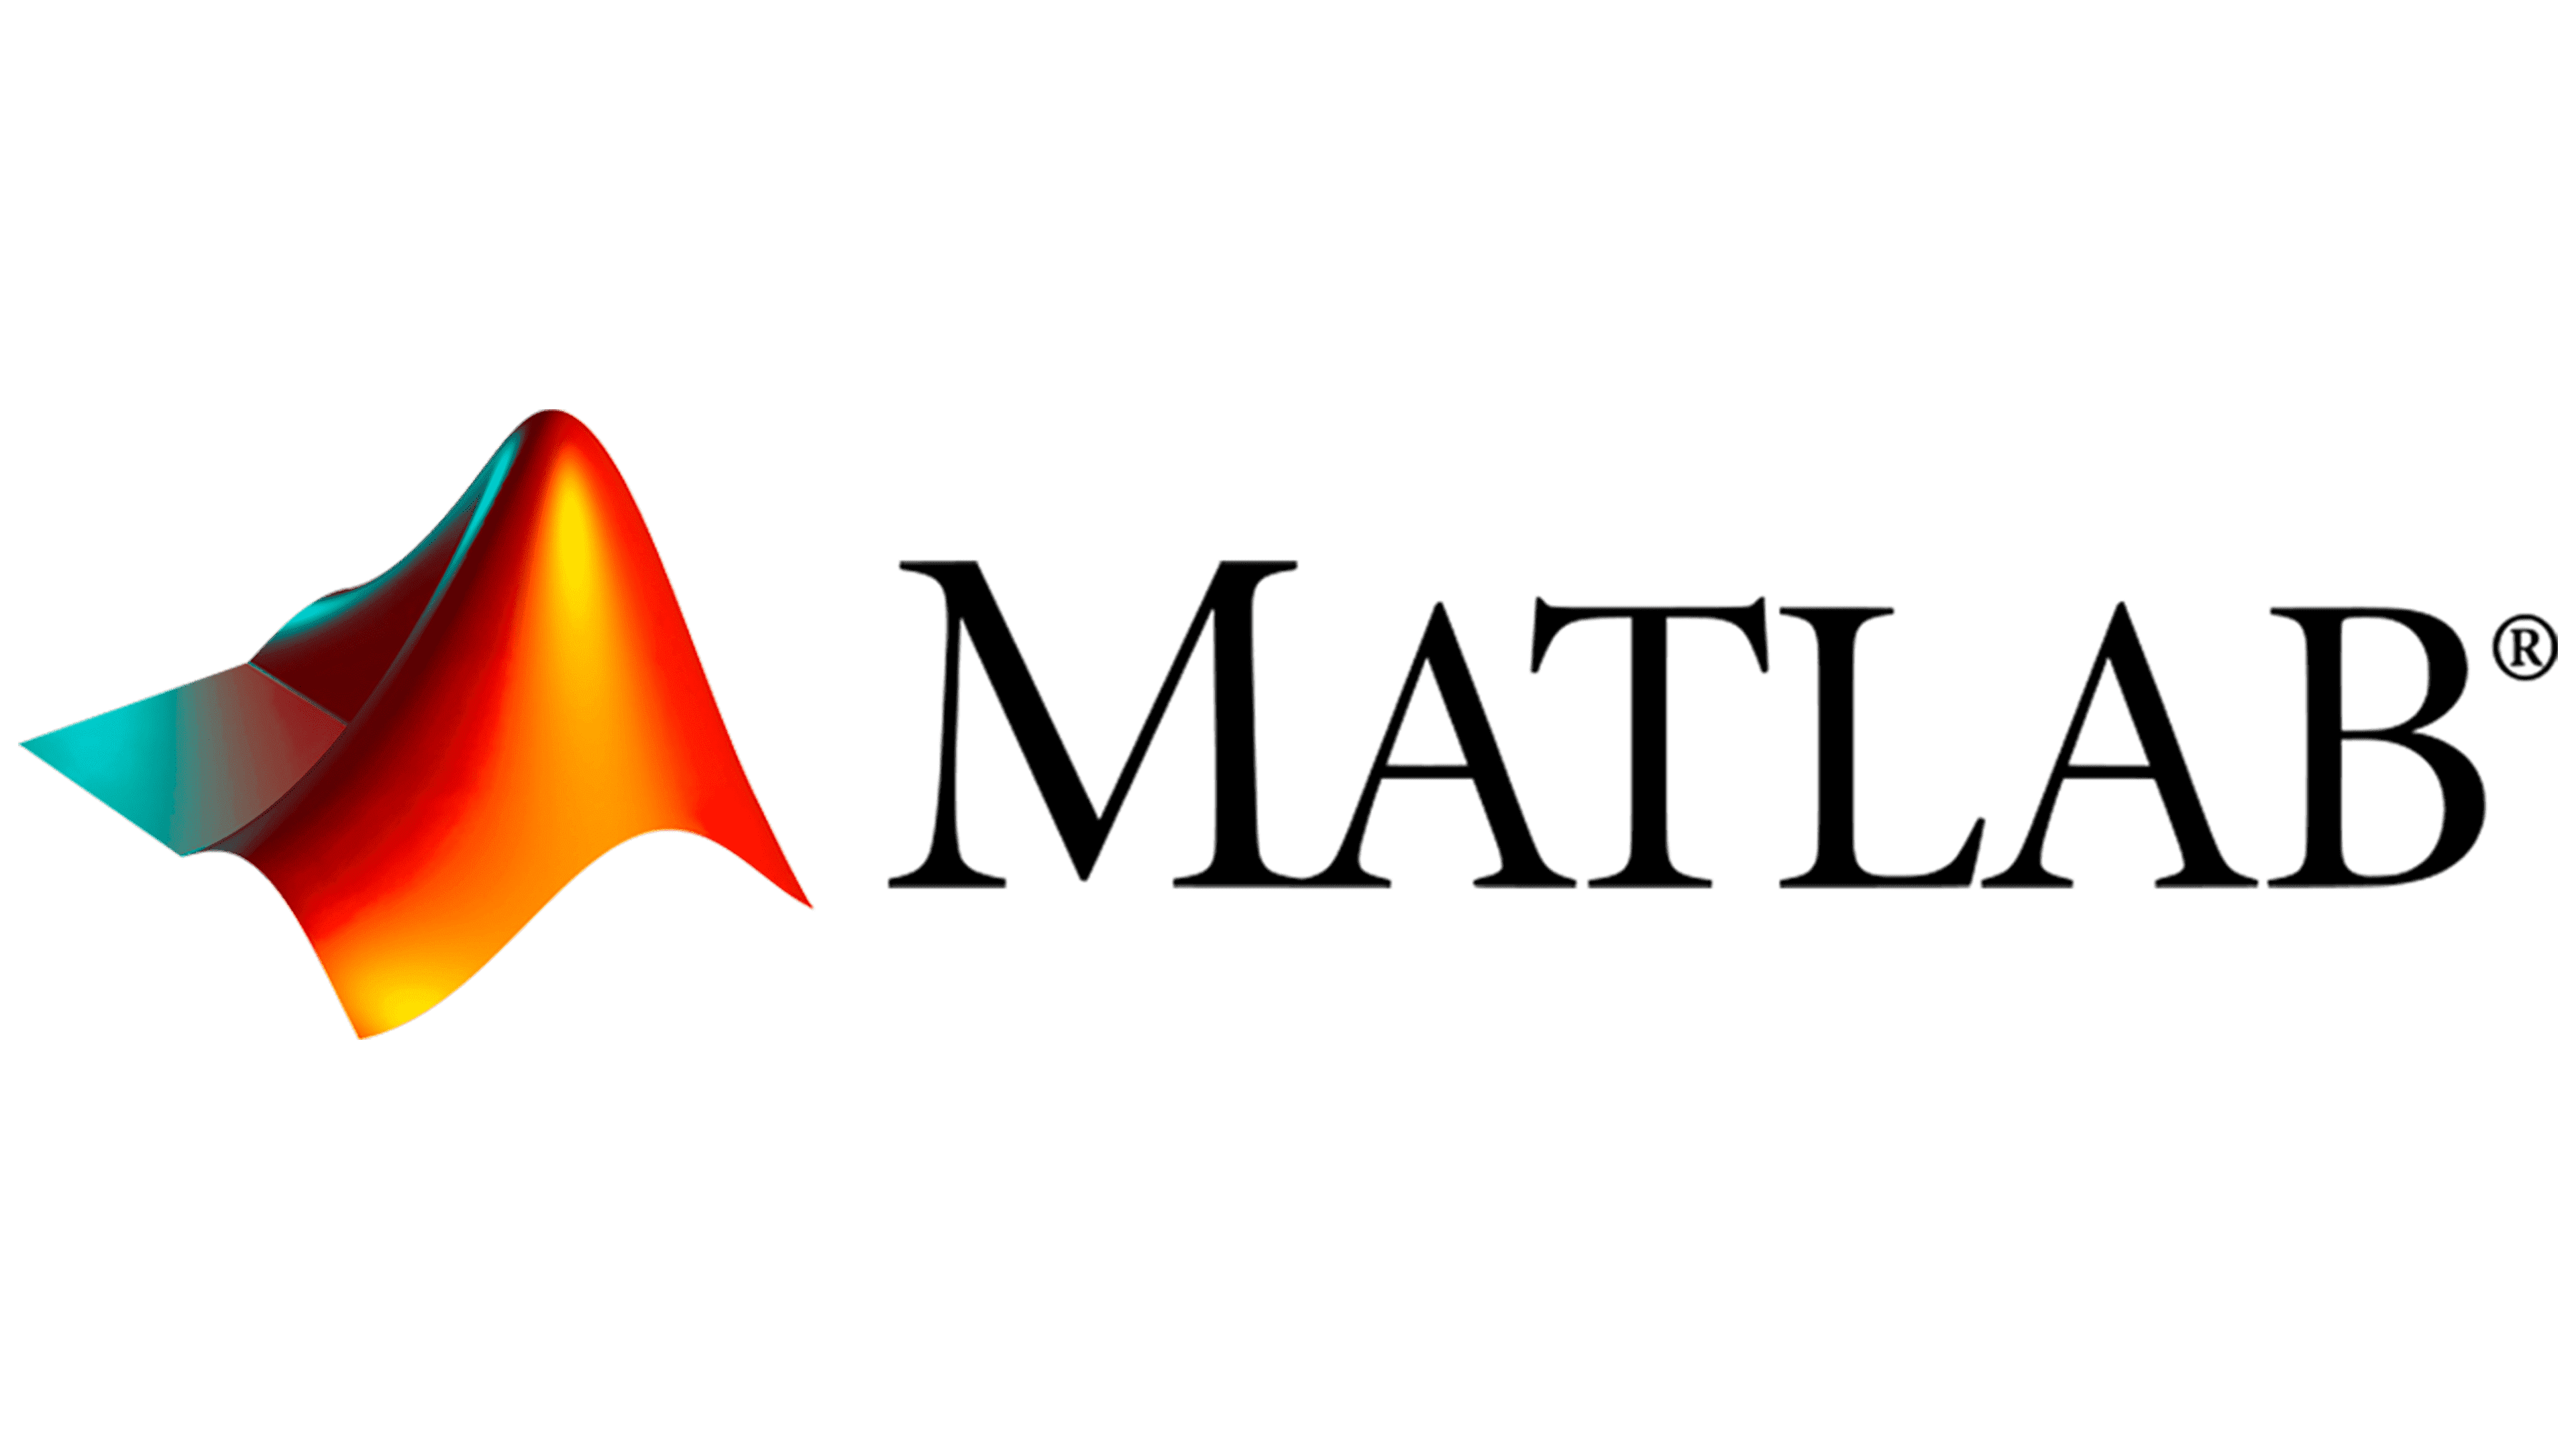 matlab vectorize matrix